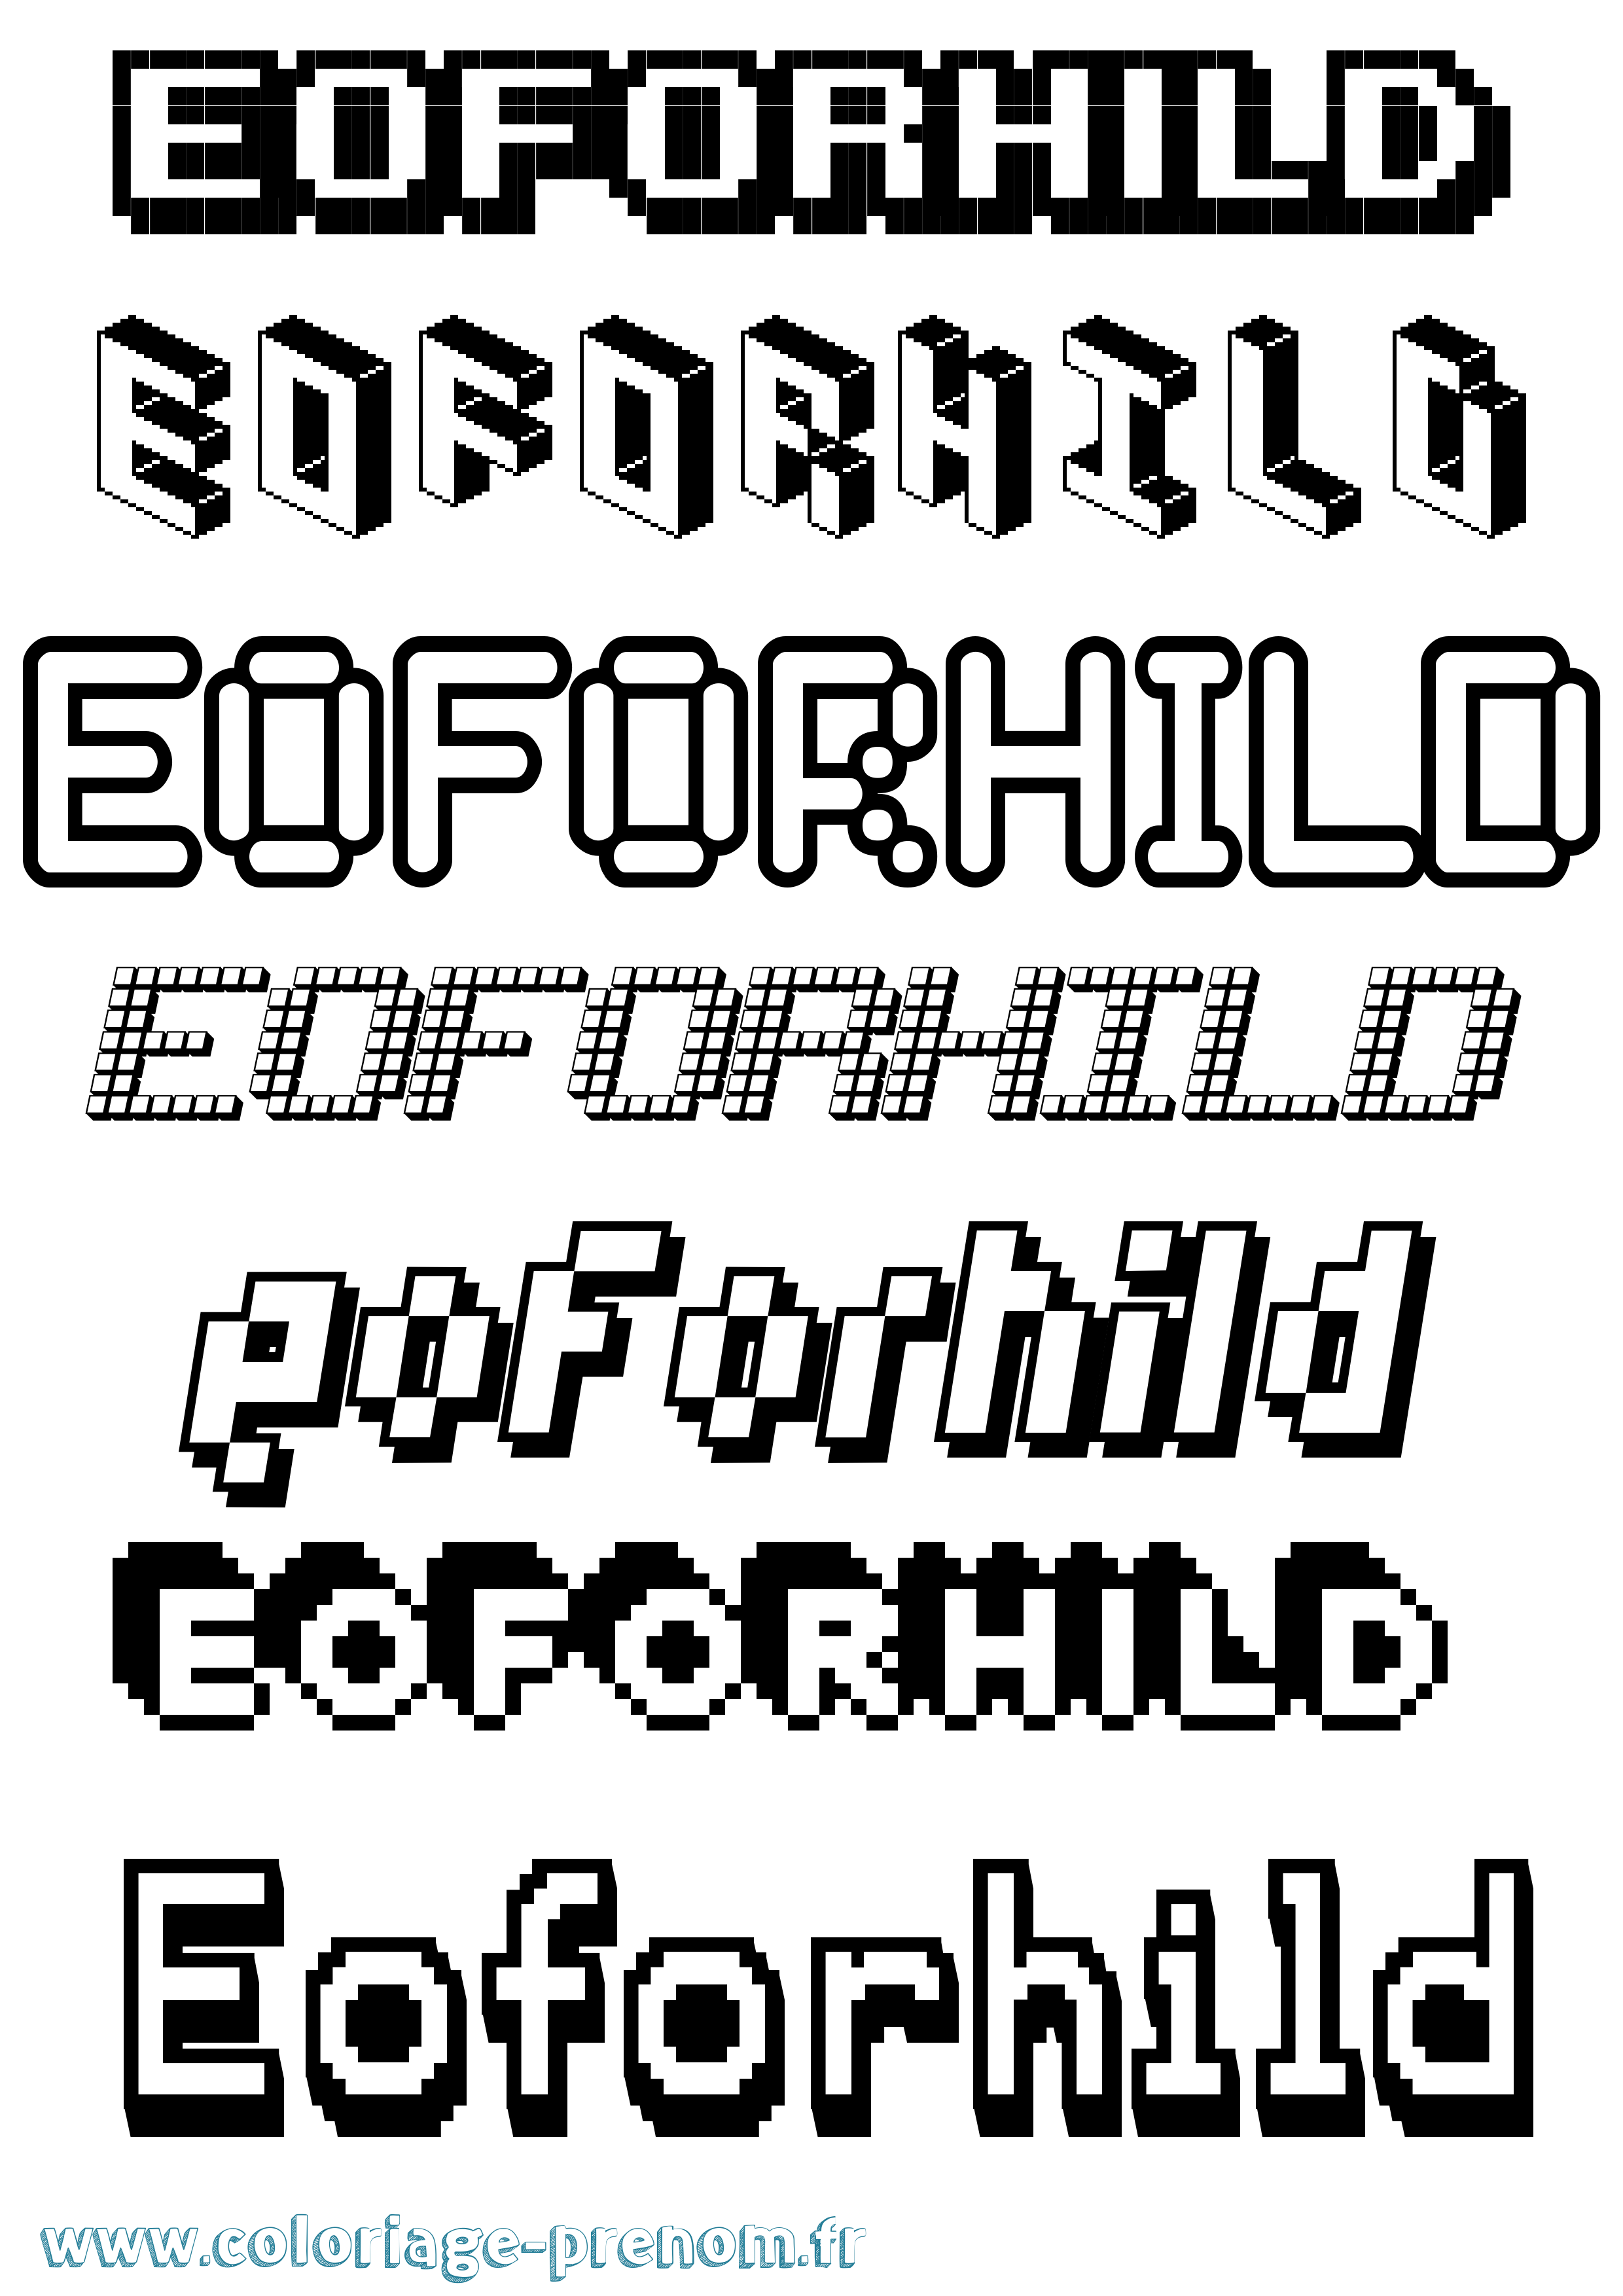 Coloriage prénom Eoforhild Pixel